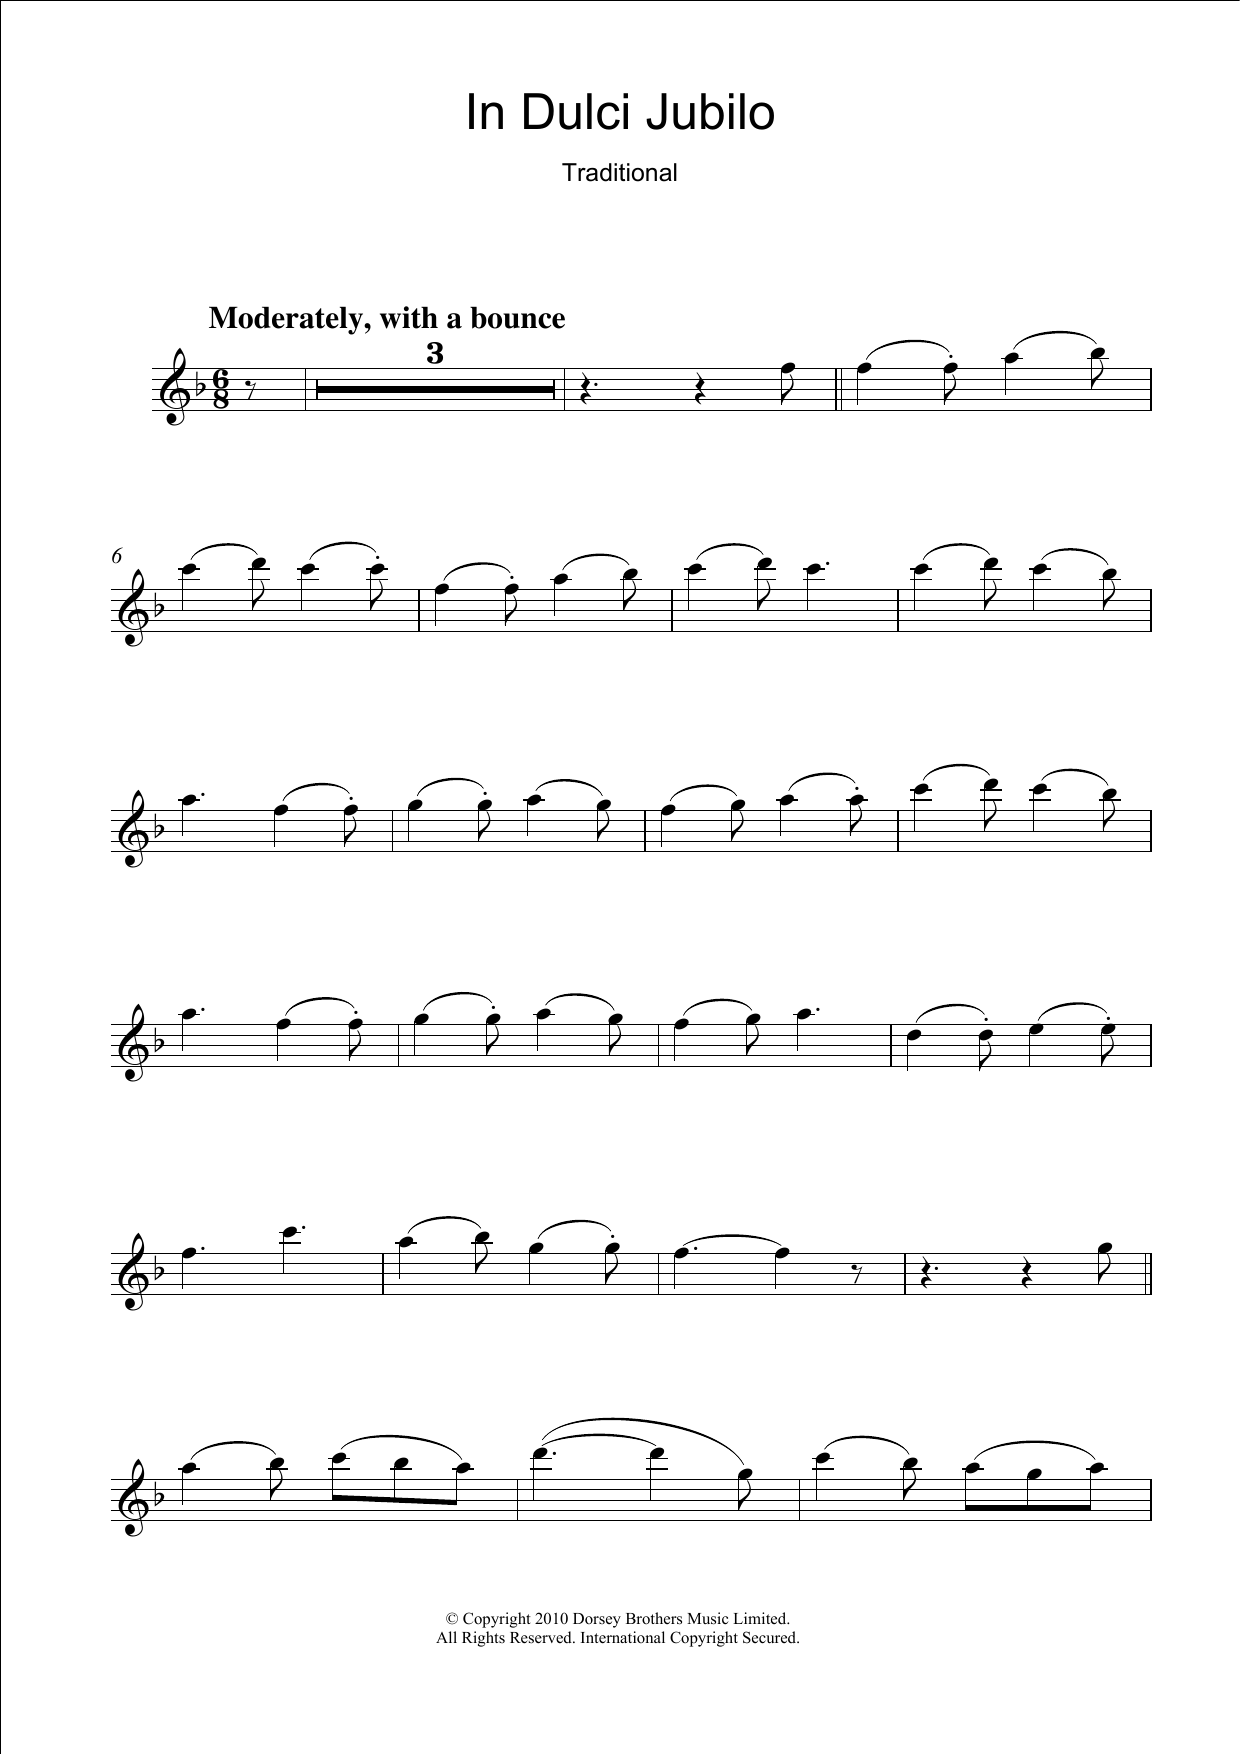 Traditional Carol In Dulci Jubilo Sheet Music Notes & Chords for Clarinet - Download or Print PDF